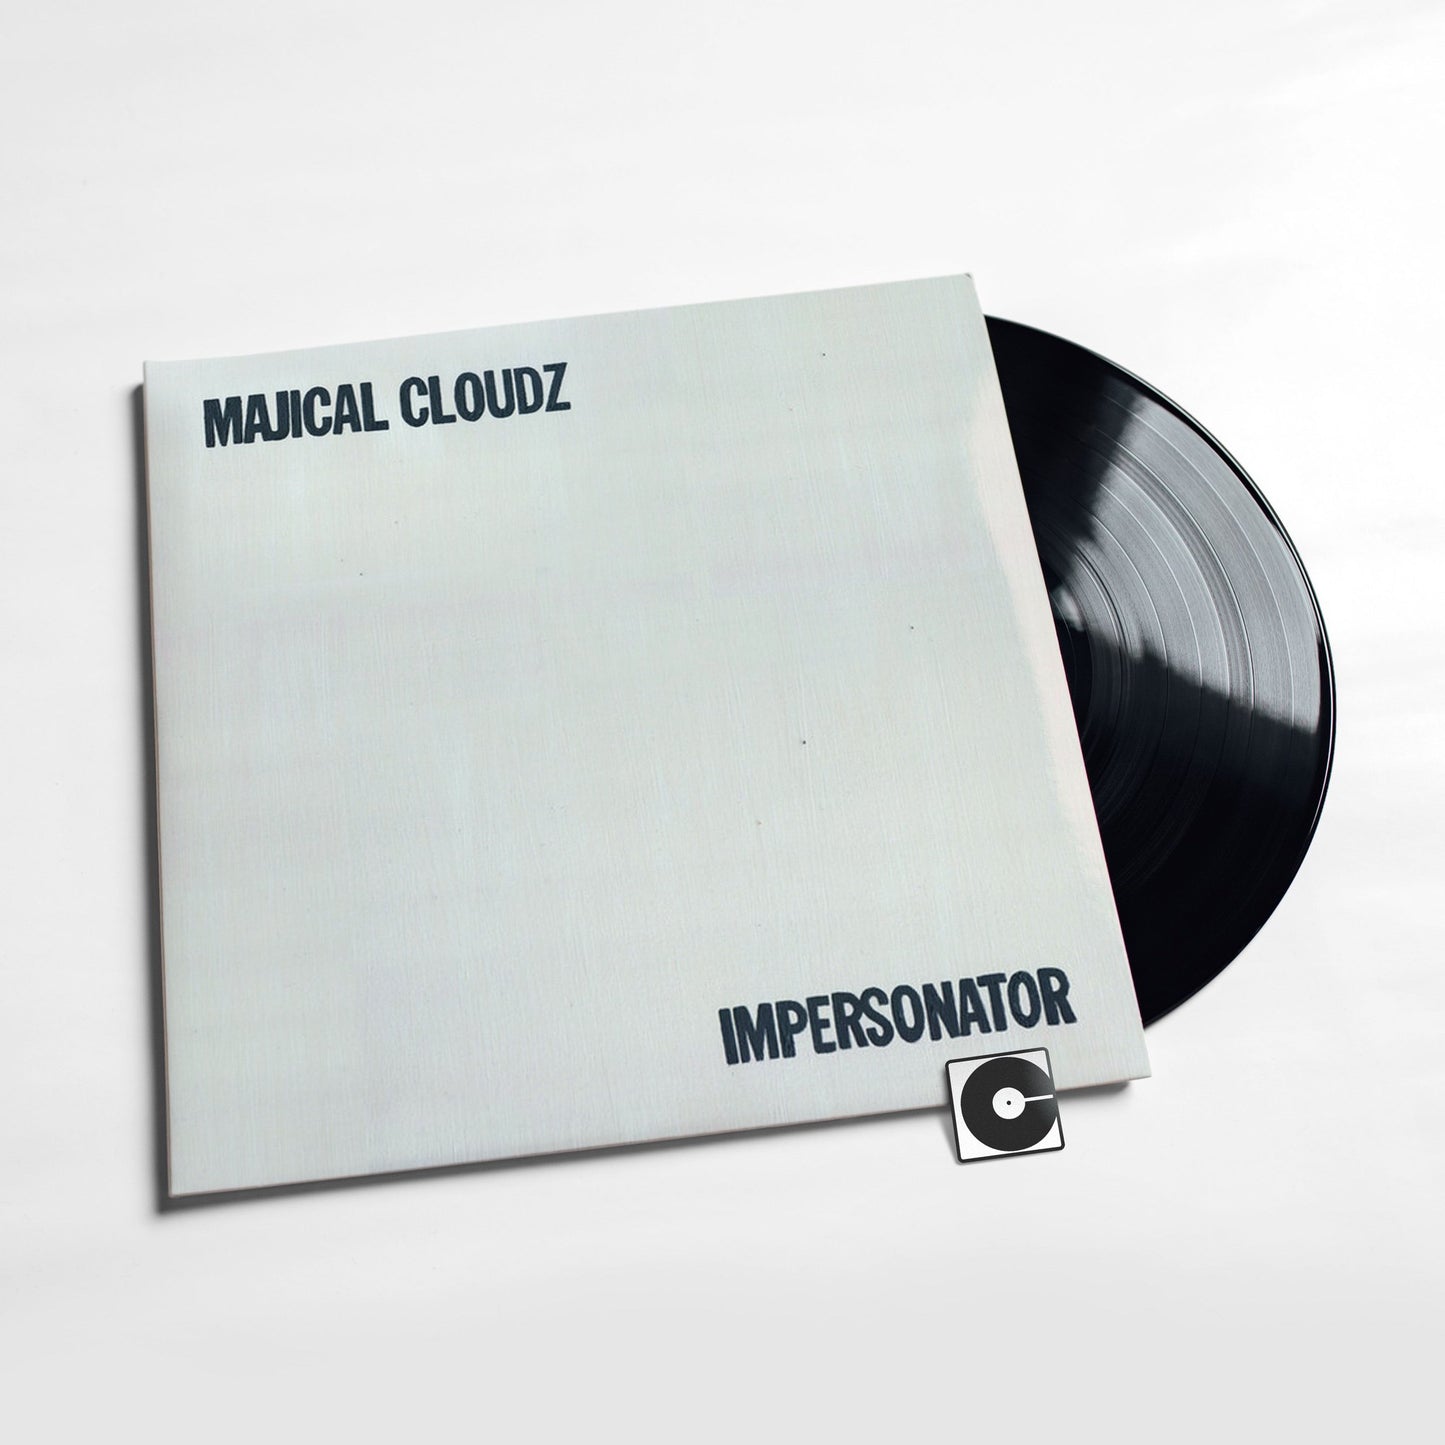 Majical Cloudz - "Impersonator"